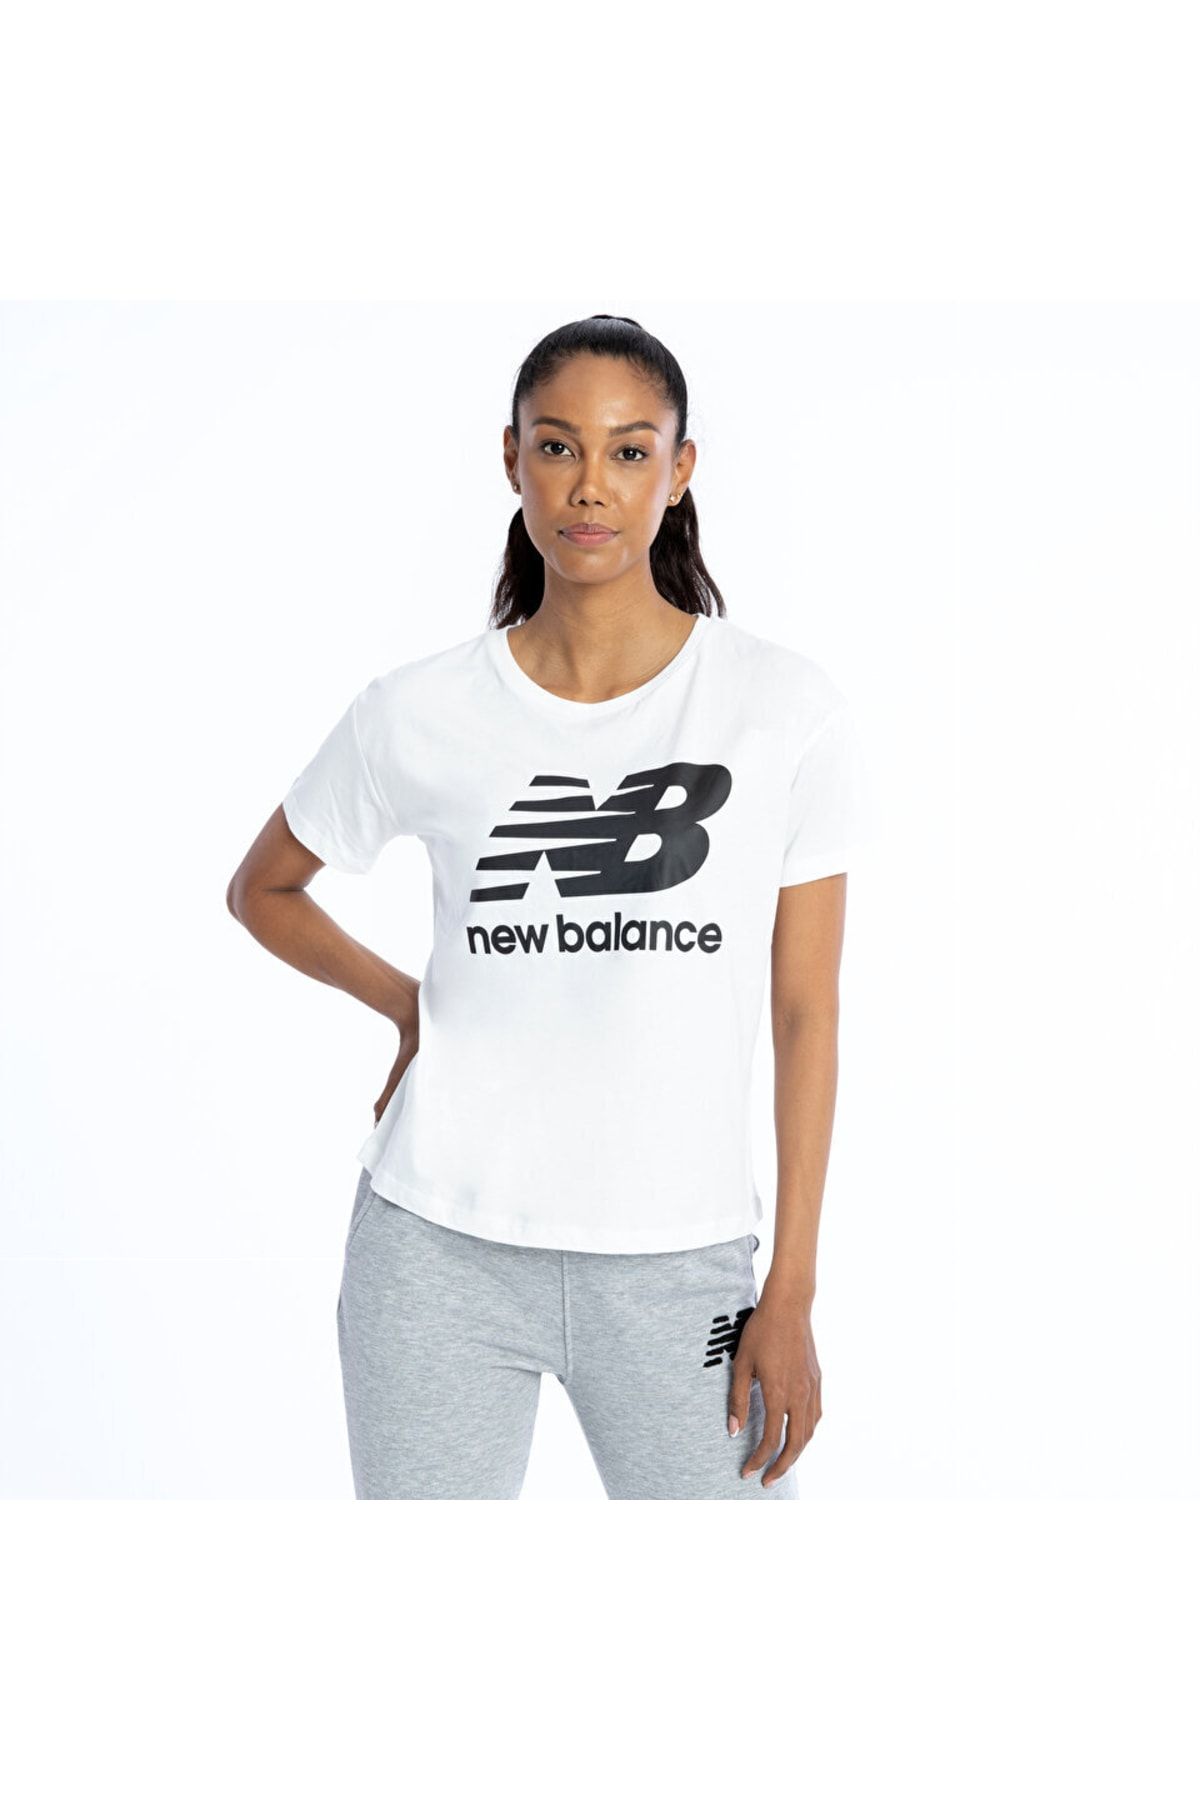 New Balance Wnt1203-wt New Balance Nb Womens Lifestyle Kadın T-shirt Beyaz